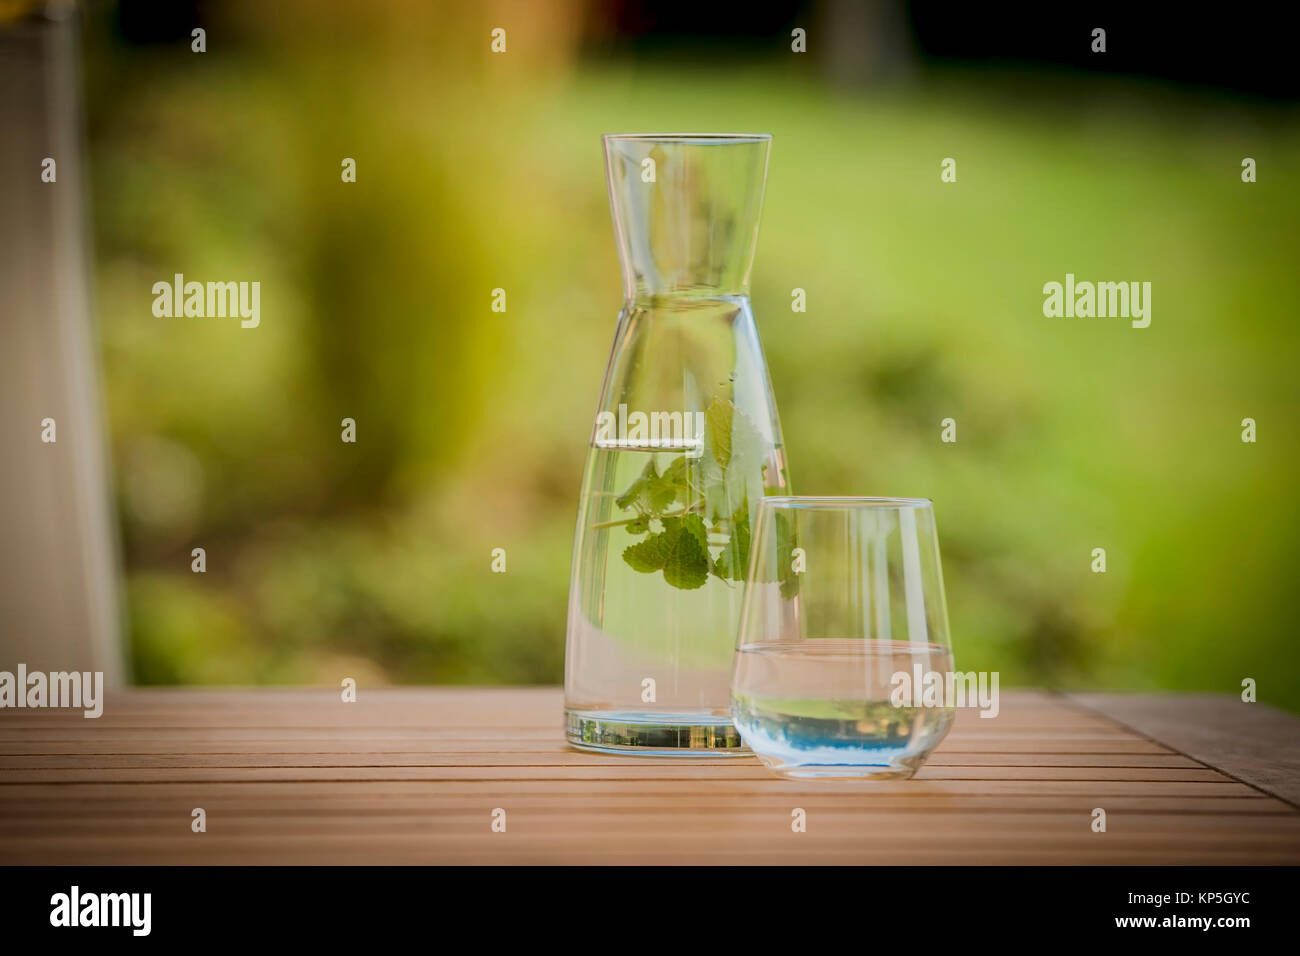 Wasserkrug- und glas mit Kraeutern - acqua Vaso con erbe aromatiche Foto Stock